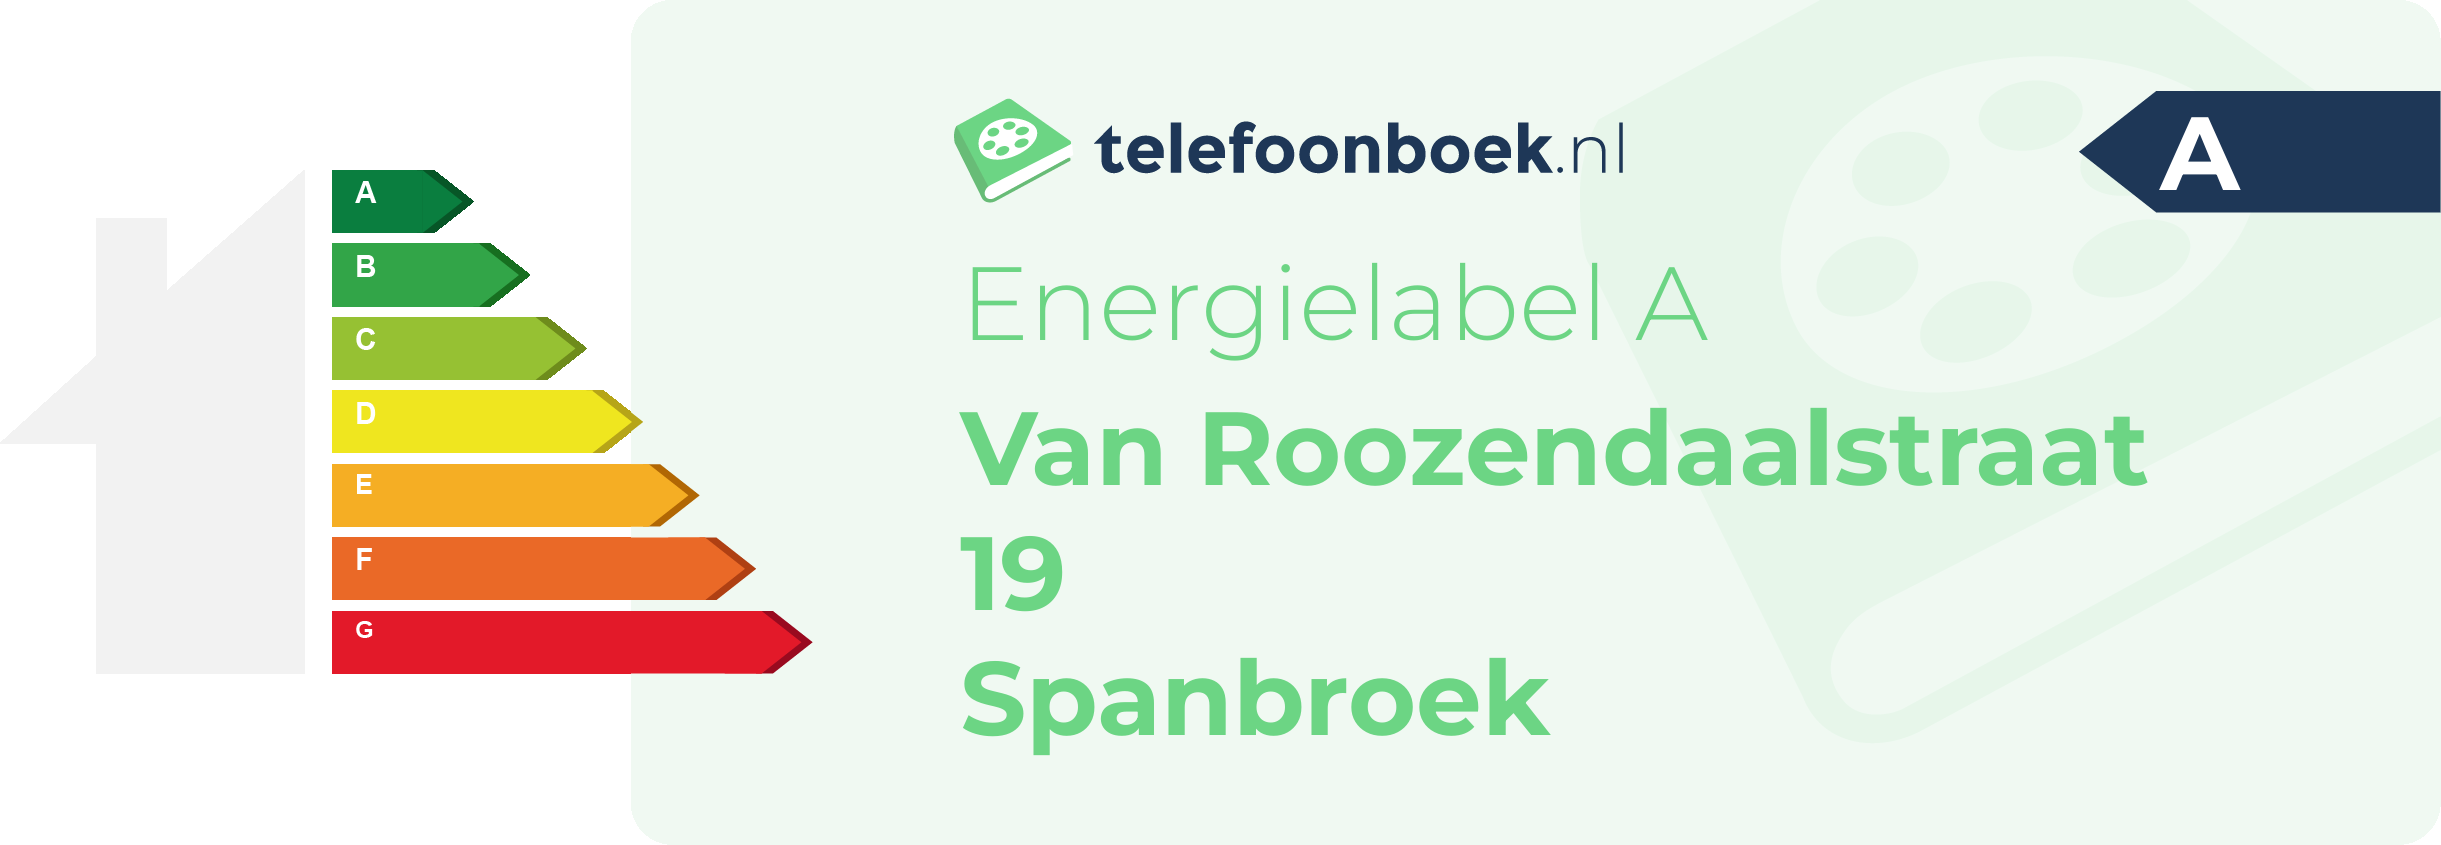 Energielabel Van Roozendaalstraat 19 Spanbroek